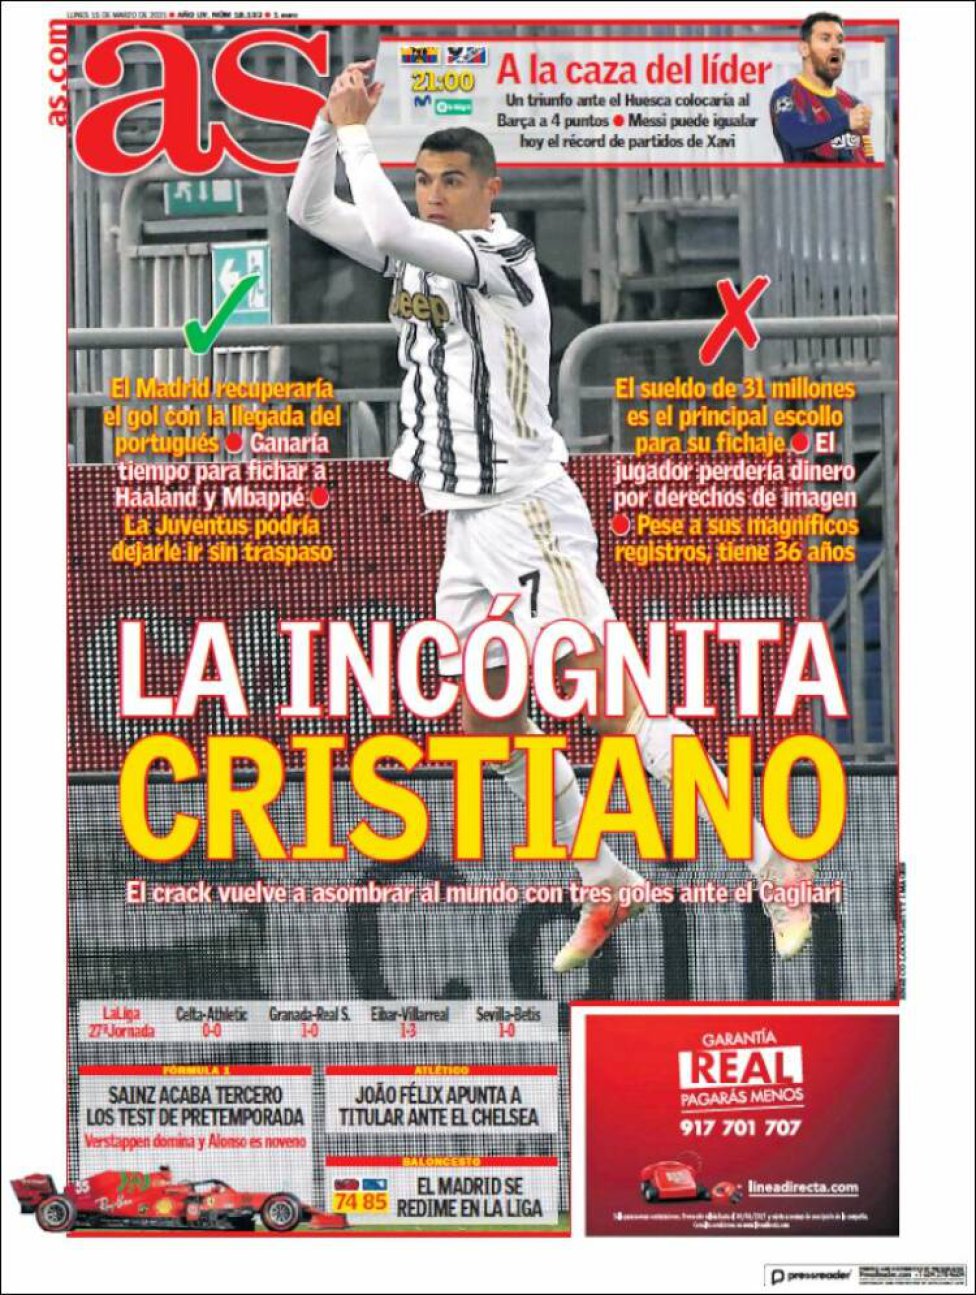 La incógnita de Cristiano"... las portadas deportivas de hoy AS.com